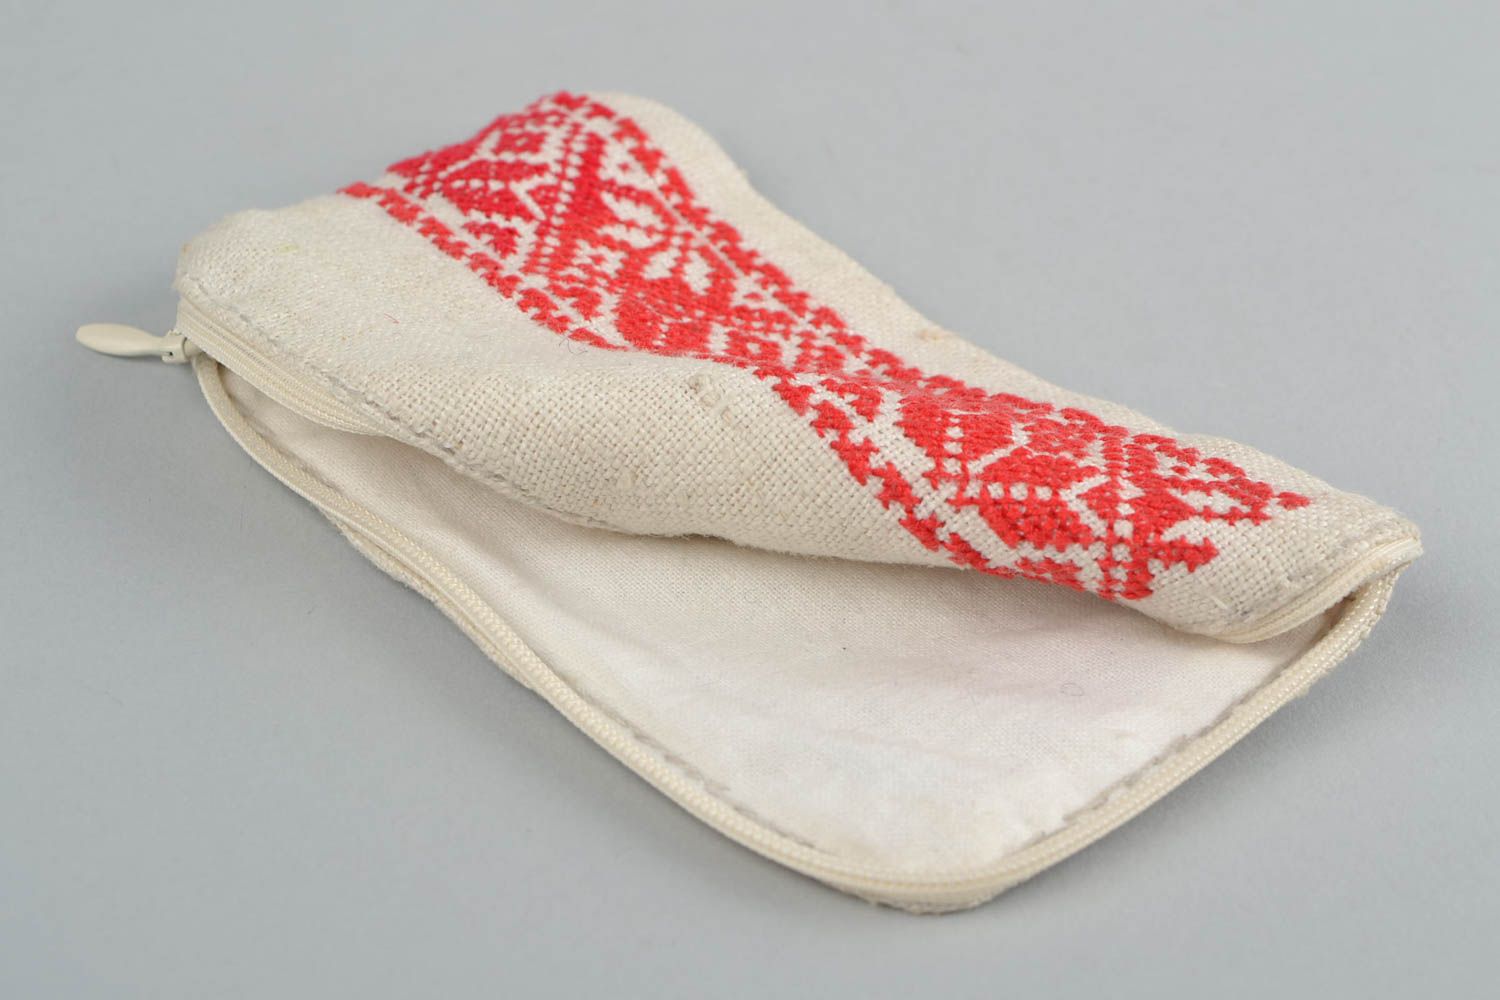 Handmade designer hemp fabric phone case with red cross stitch embroidery photo 5